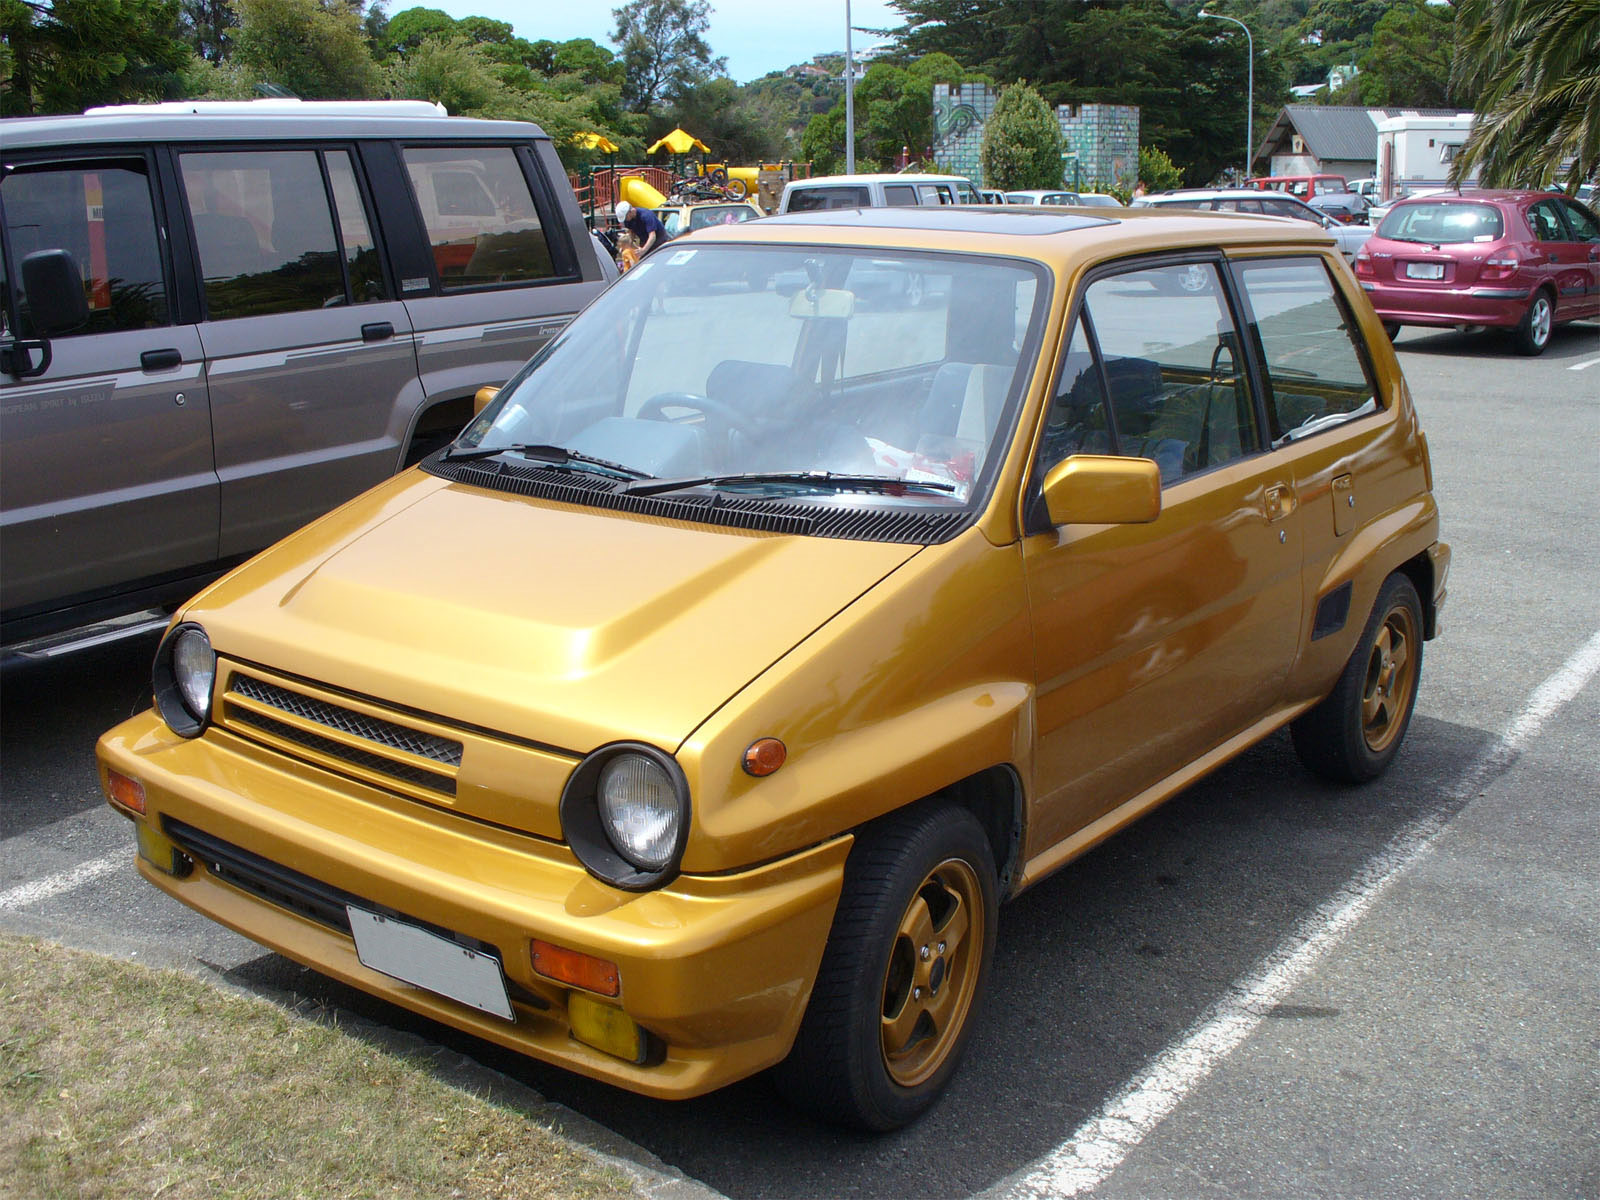 Honda City Turbo II